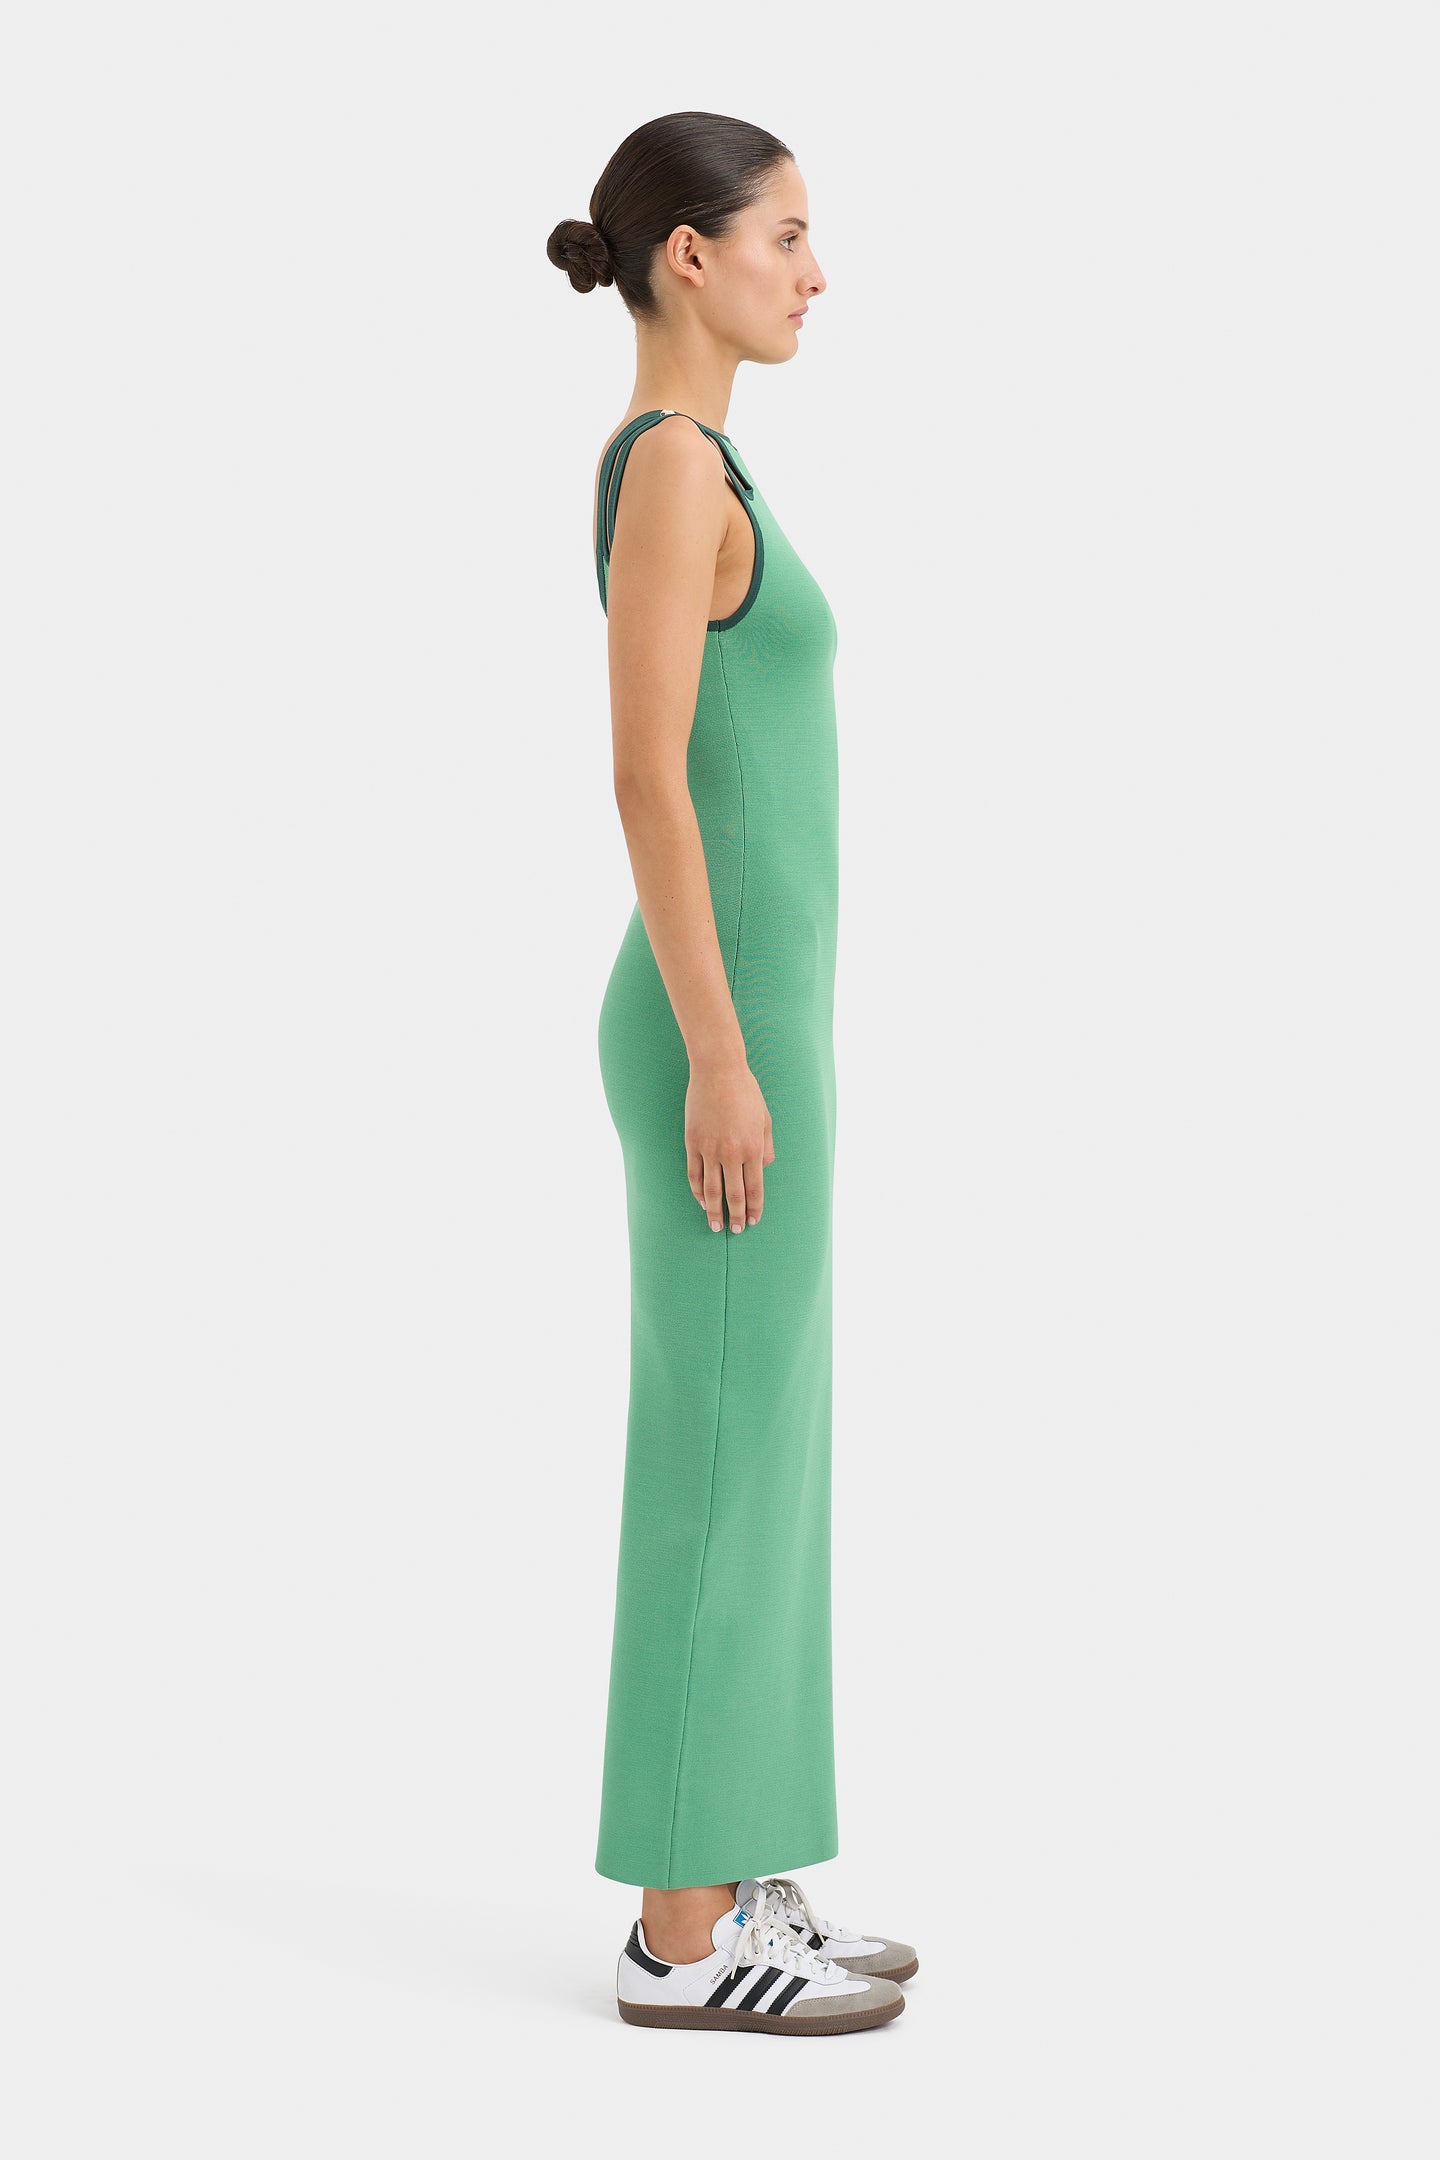 SIR The Label | Salvador Cut Out Dress - Emerald